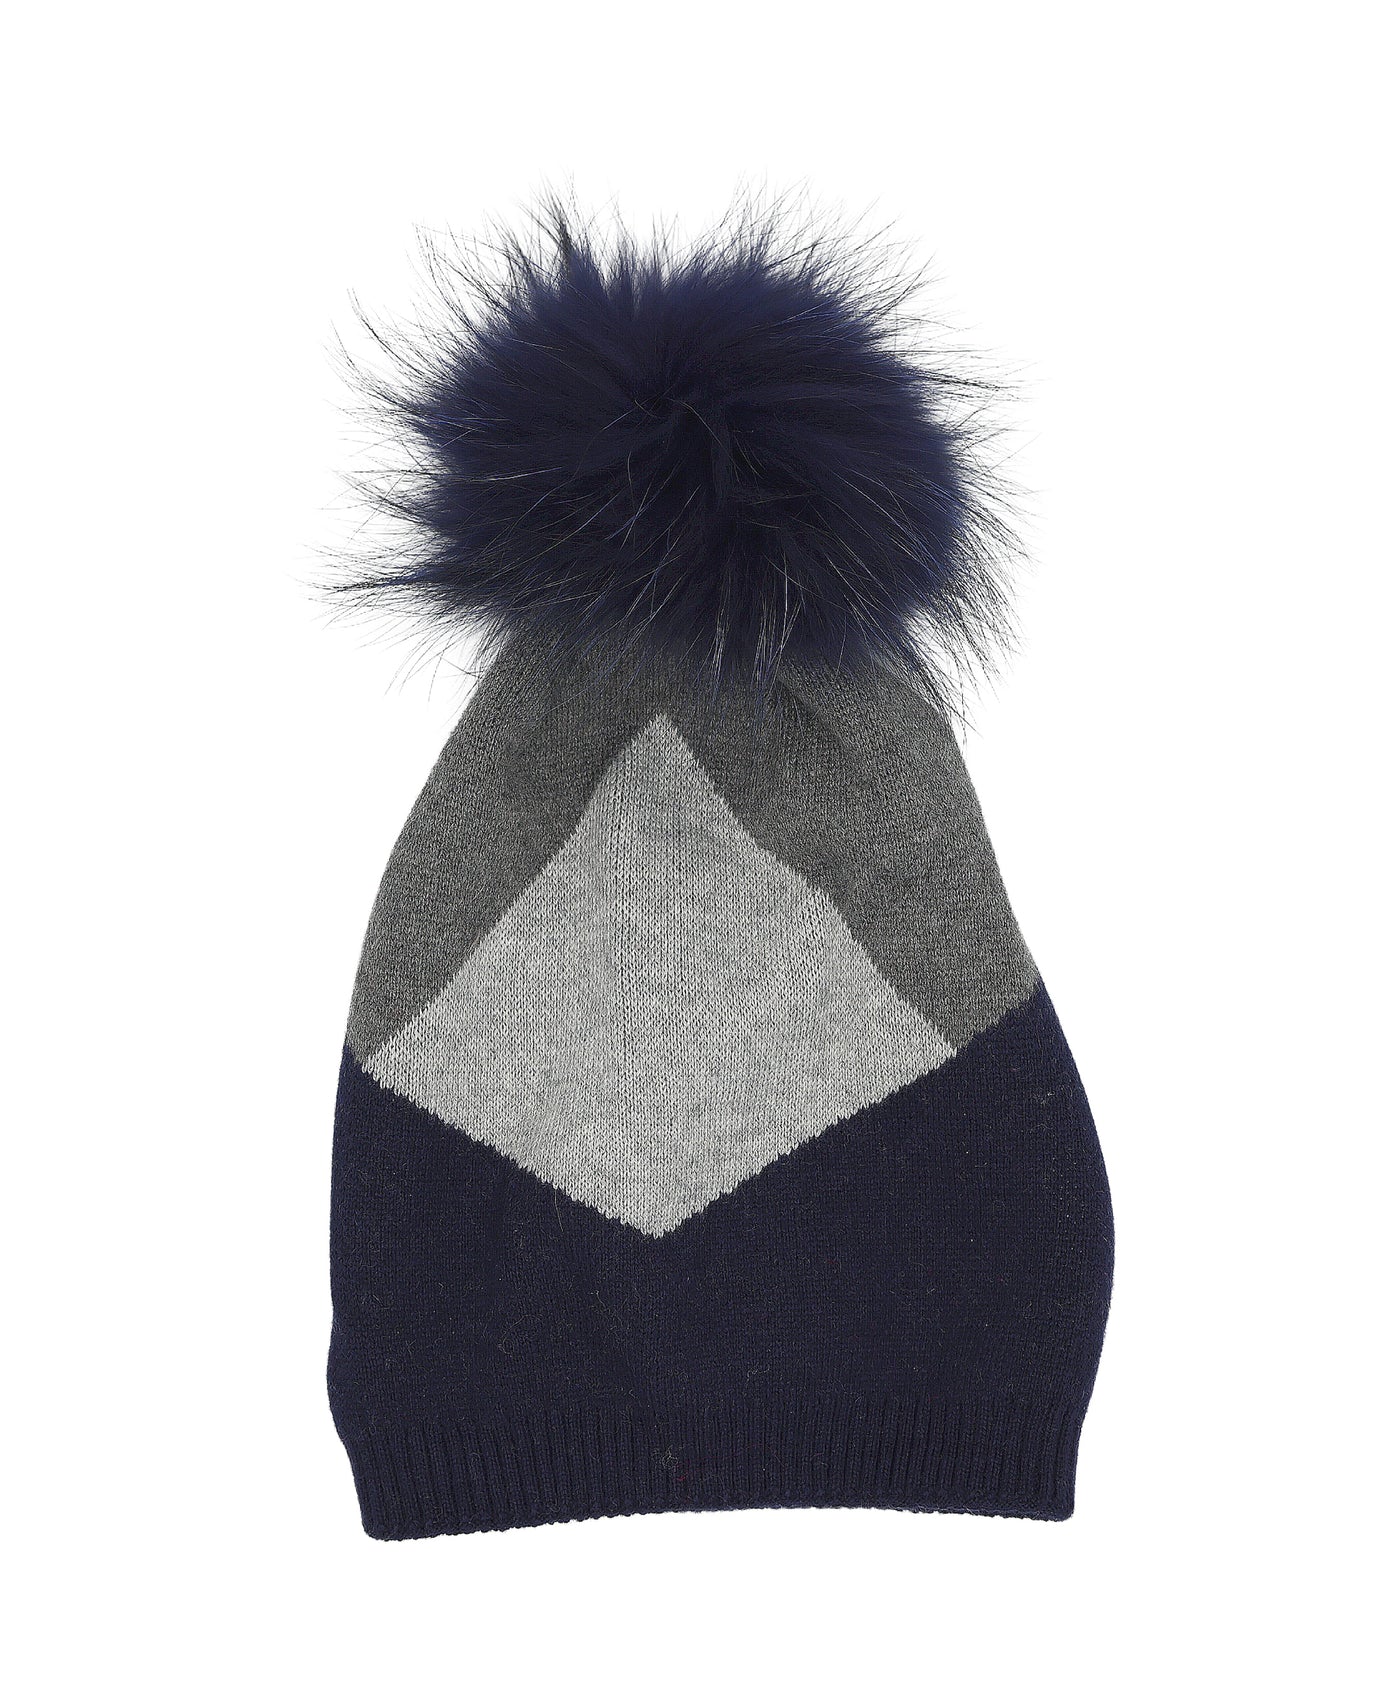 Triangle Colorblock Knit Hat w/ Fur Pom image 1